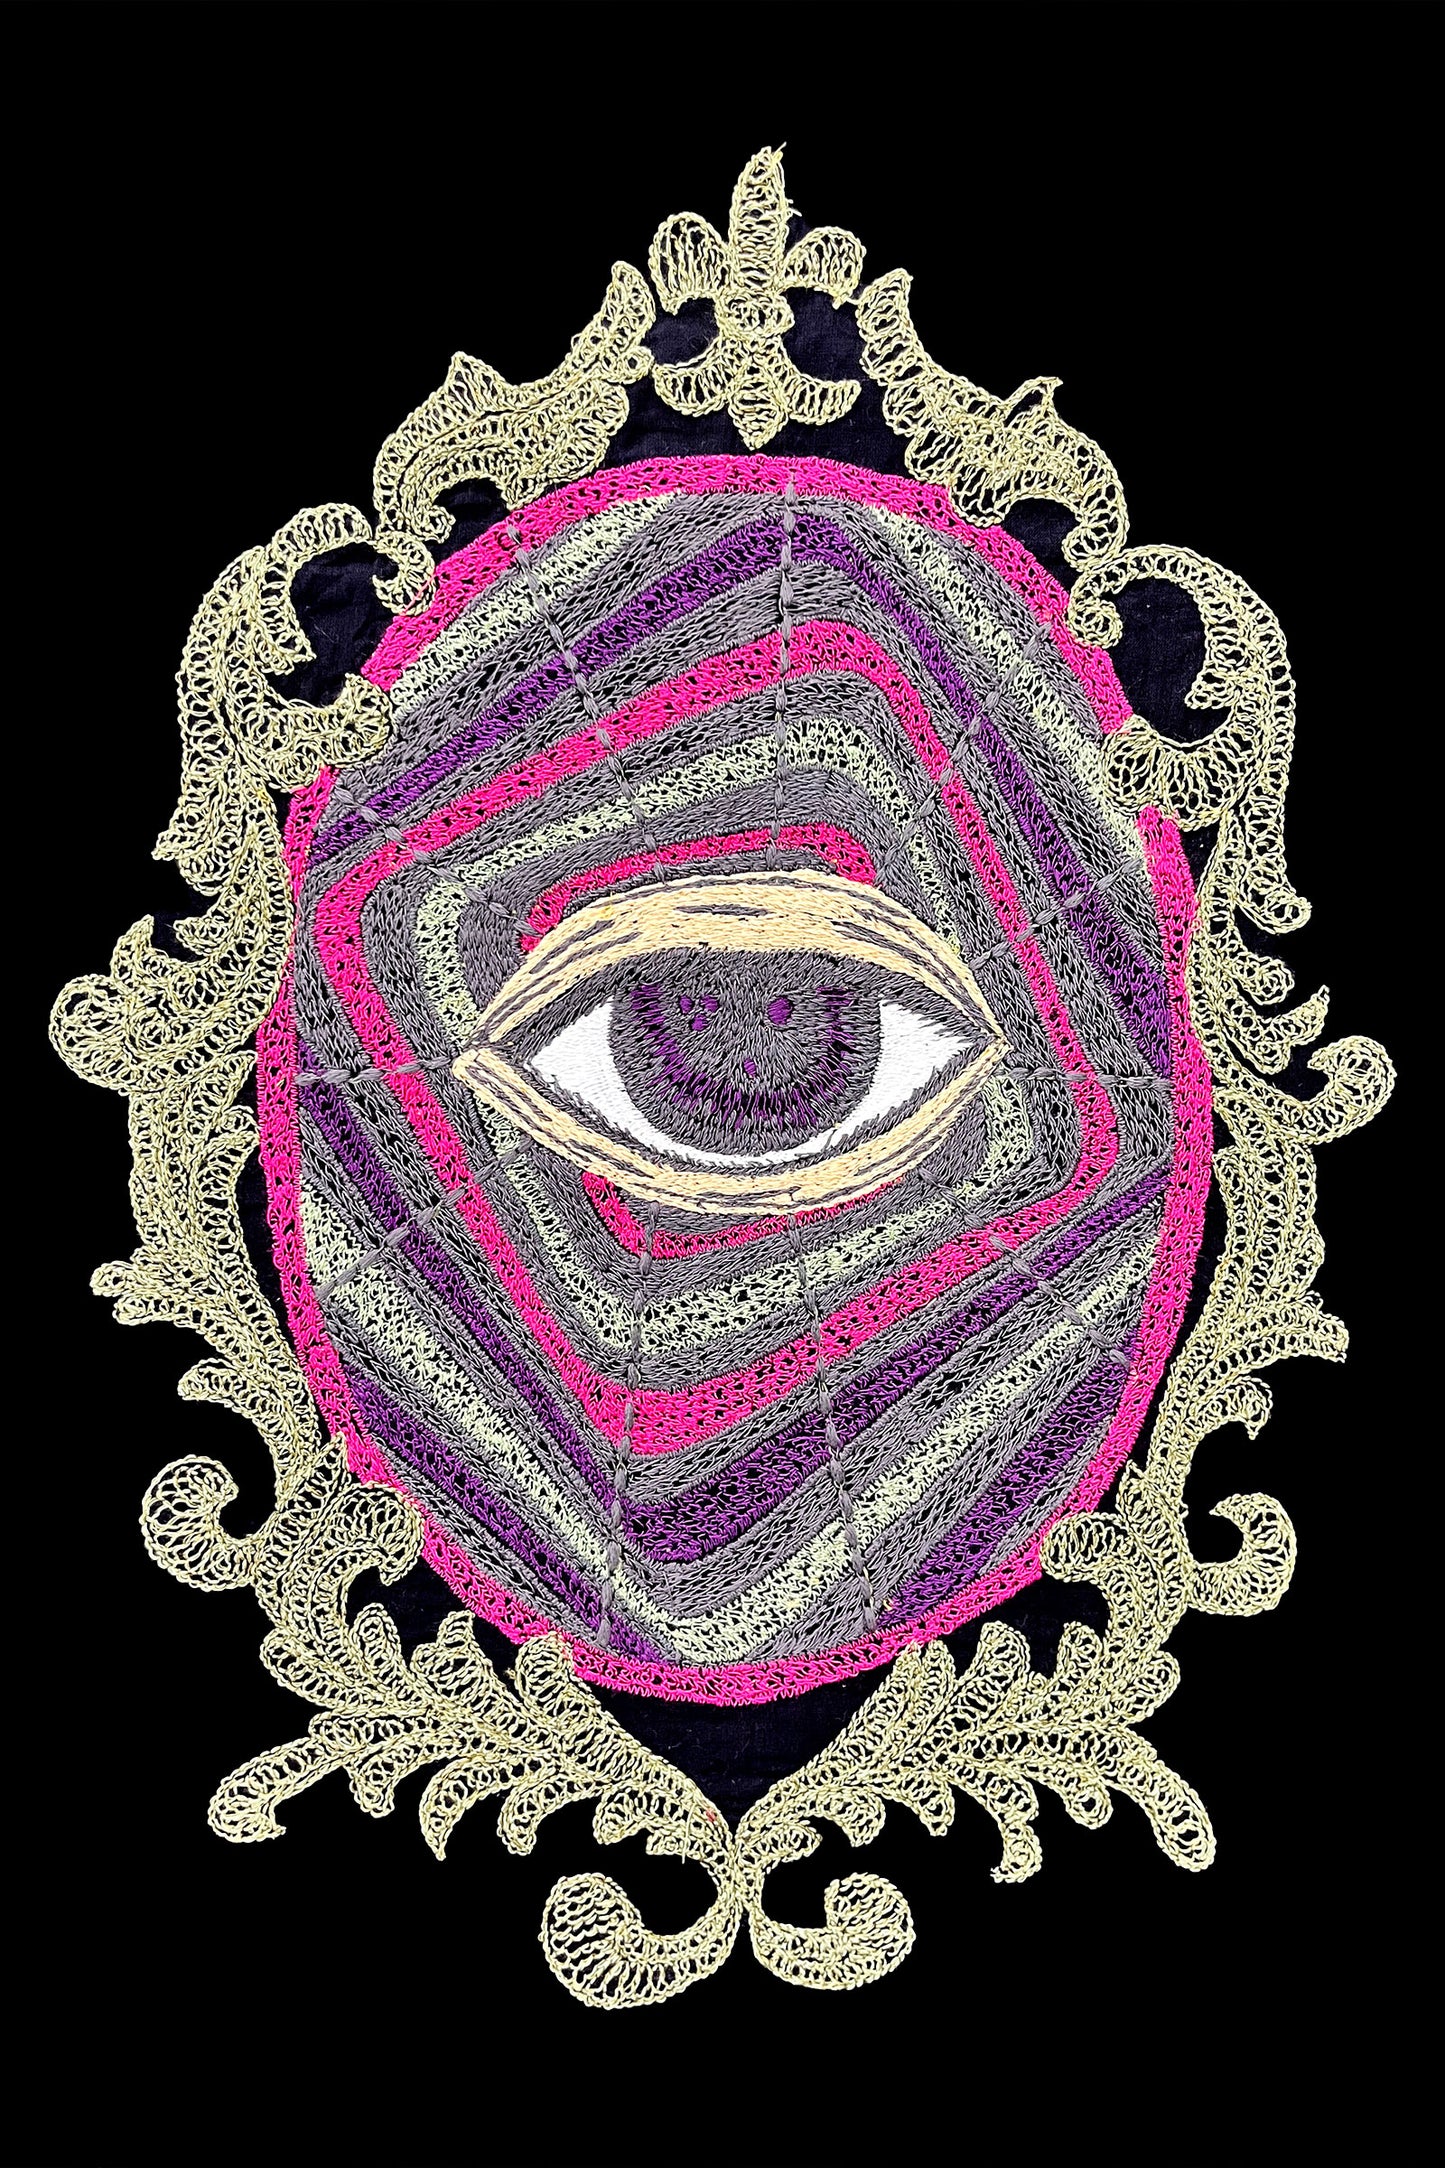 Sacred Eye Mirror Embroidered Artwork Half Sleeve T-shirt For Women